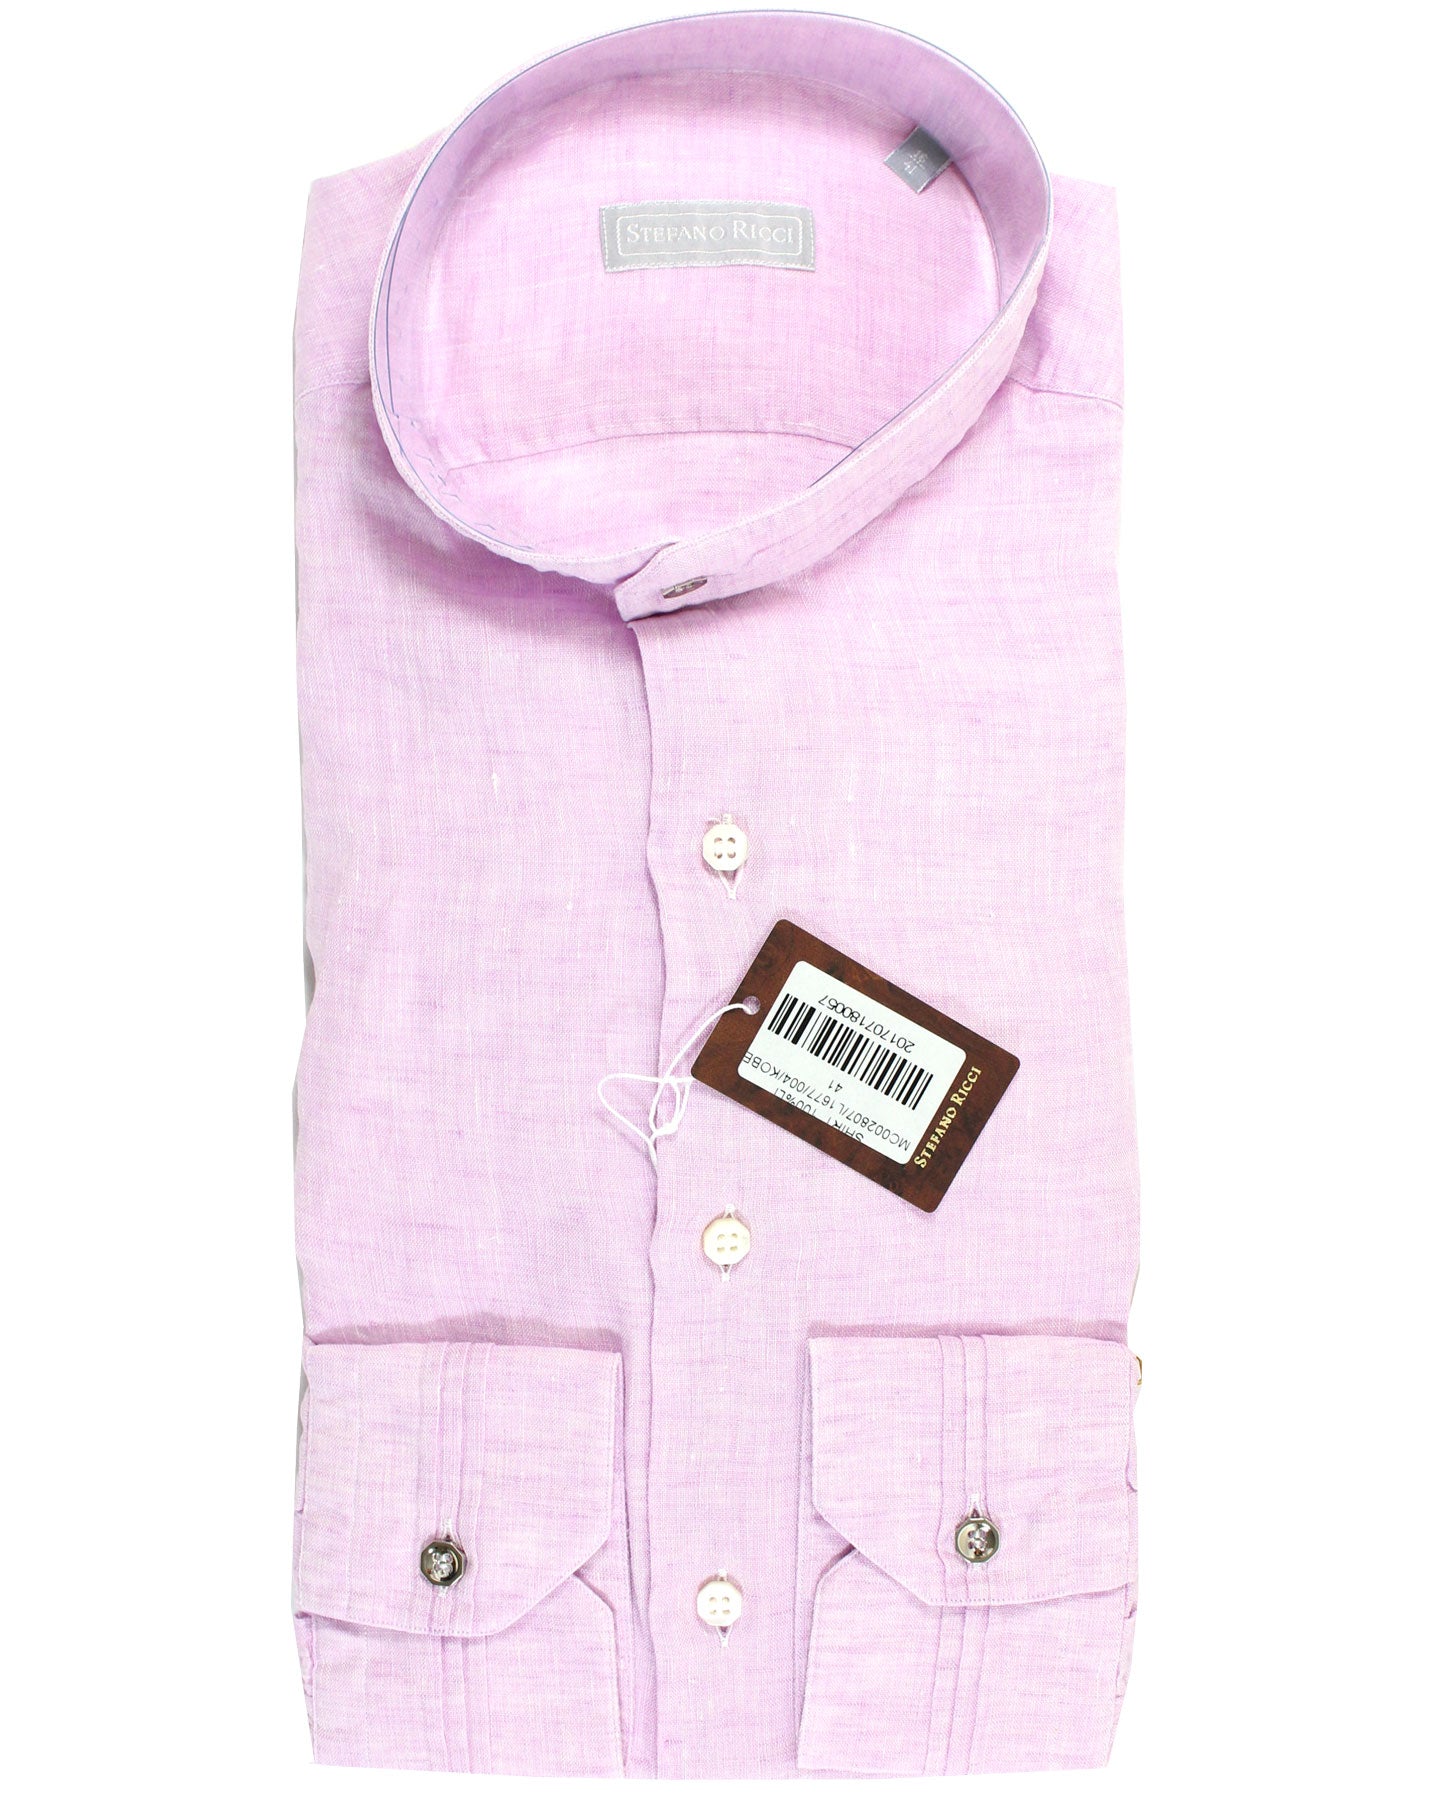 Stefano Ricci Shirt Pink Solid 39 - 15 3/4